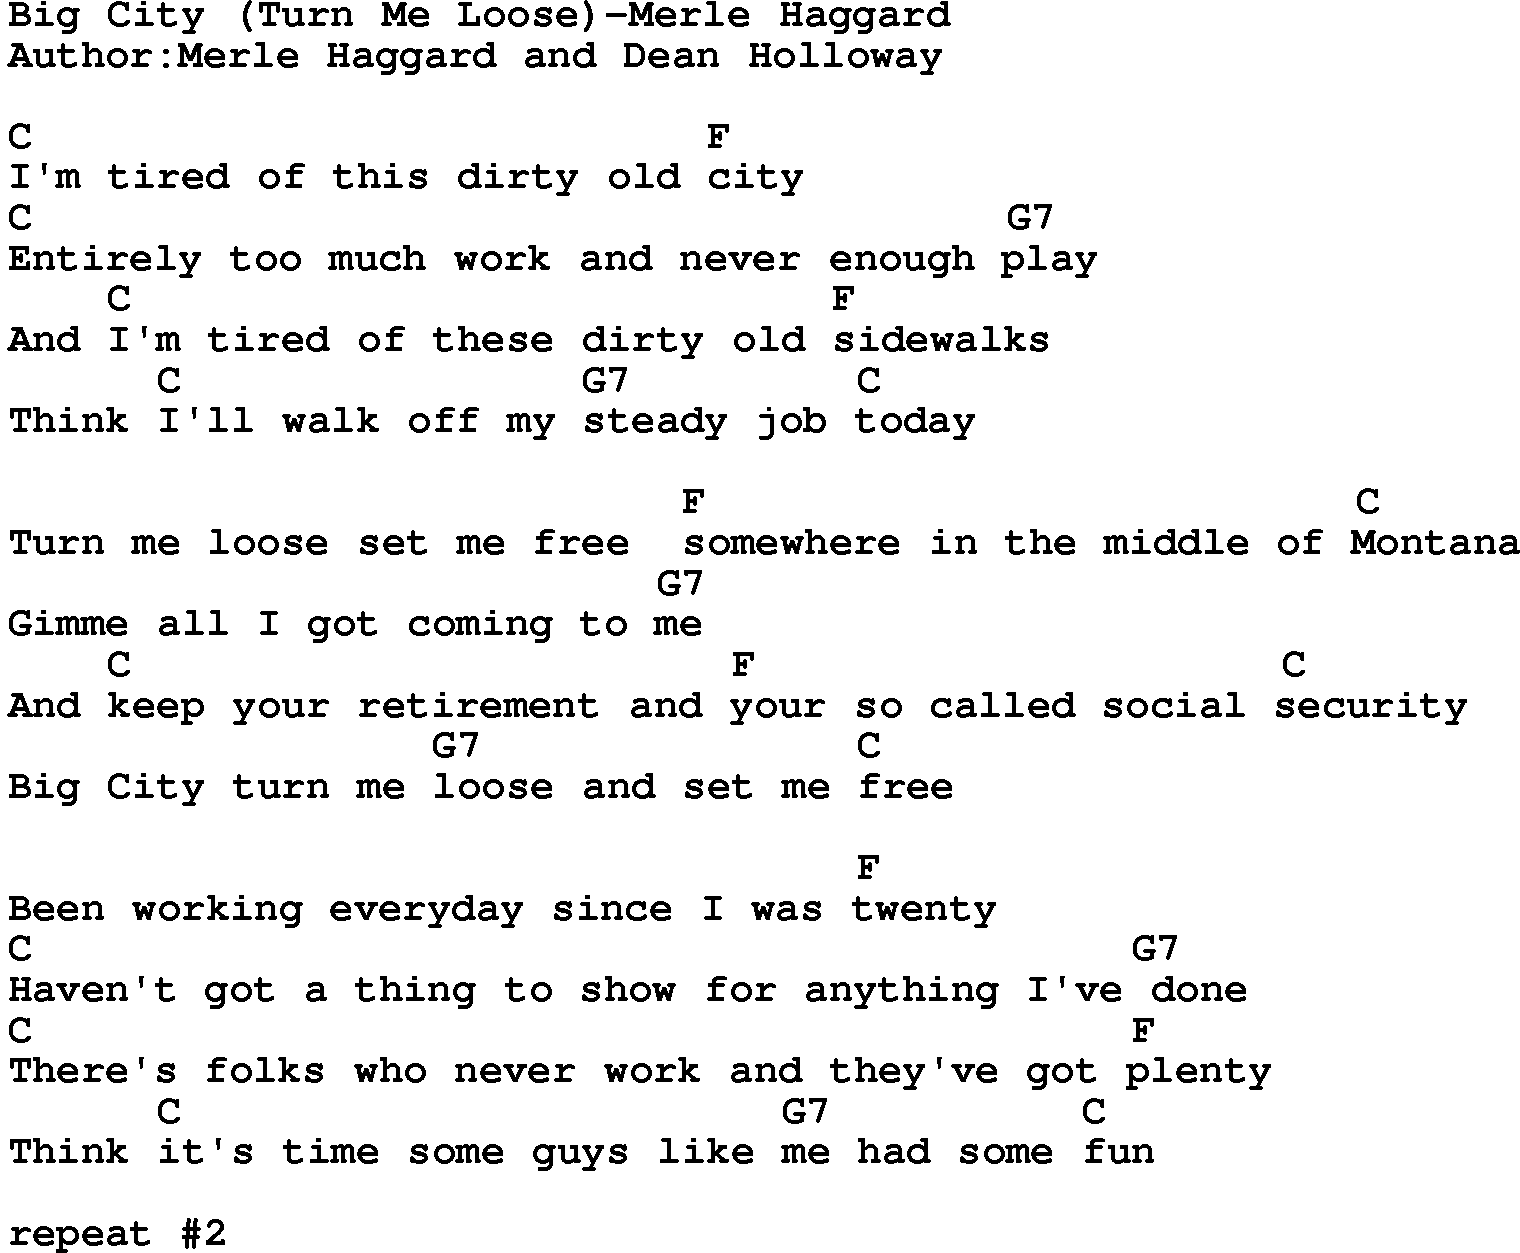 Country music song: Big City(Turn Me Loose)-Merle Haggard lyrics and chords